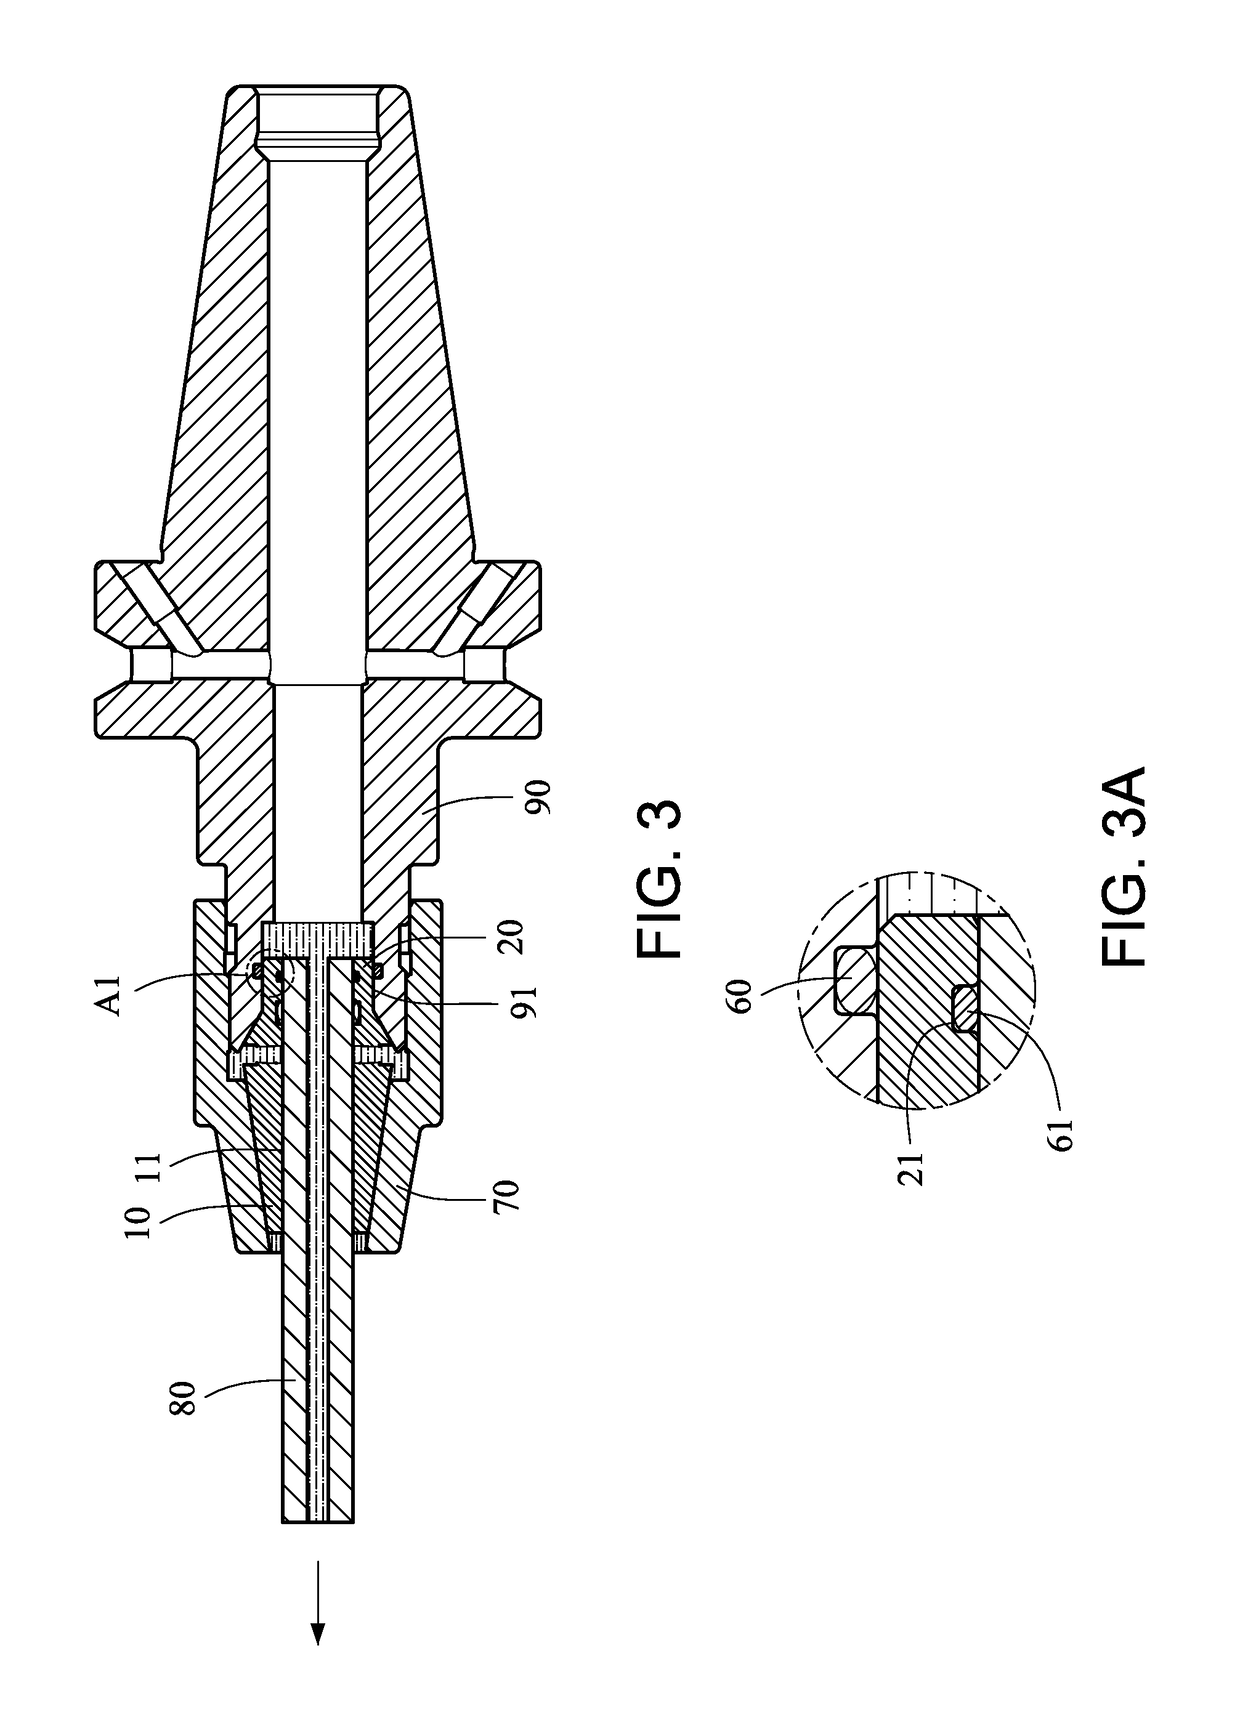 Blade fastening device having a waterproof arrangement